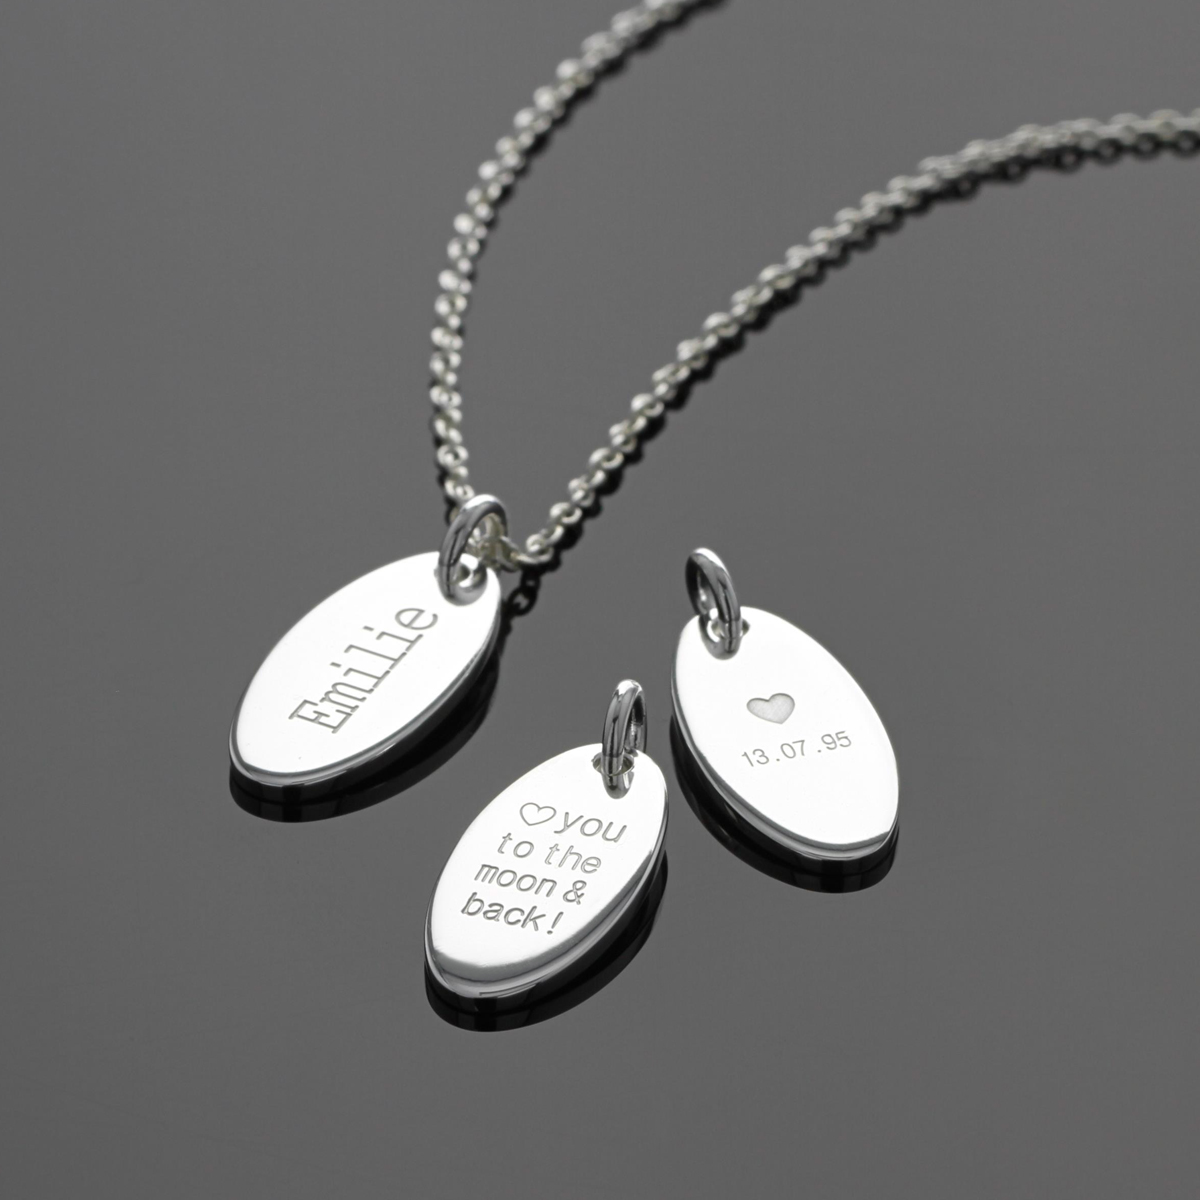 Personalised silver pendants